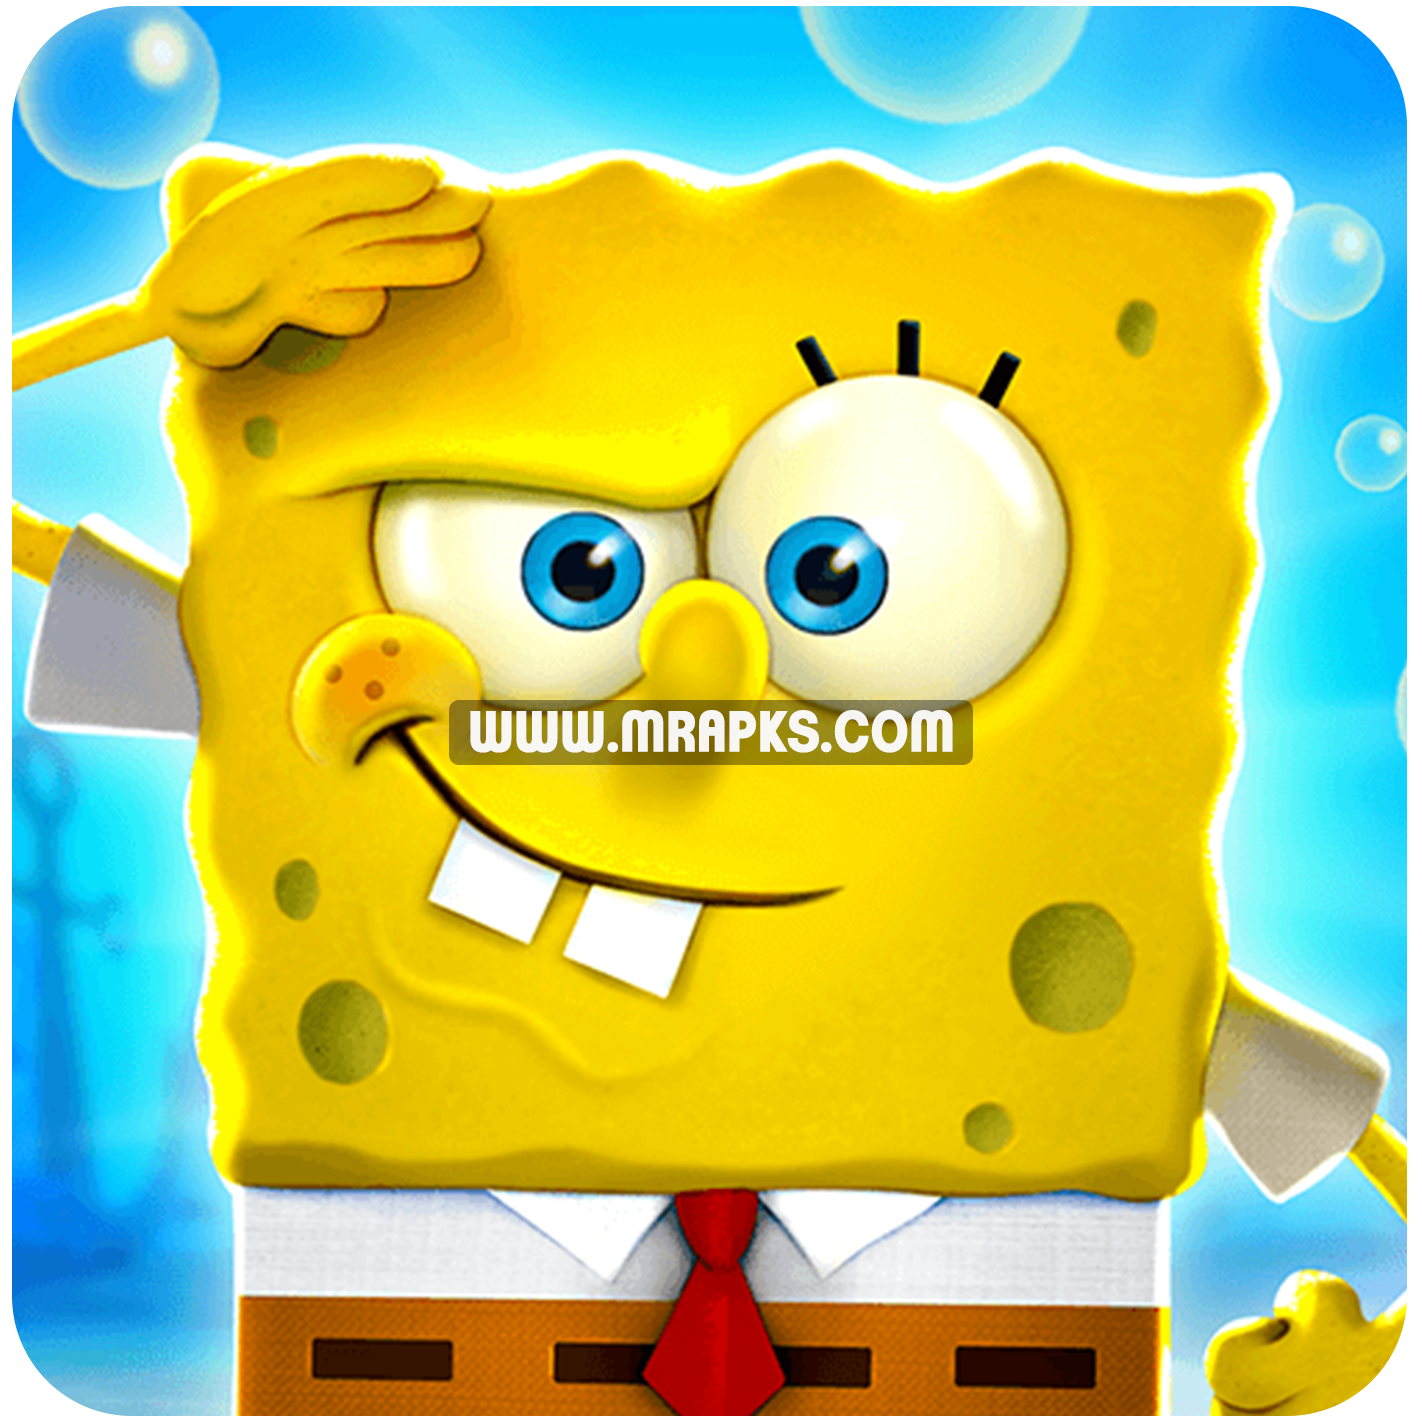 SpongeBob SquarePants: Battle for Bikini Bottom v1.2.2 (MOD) APK